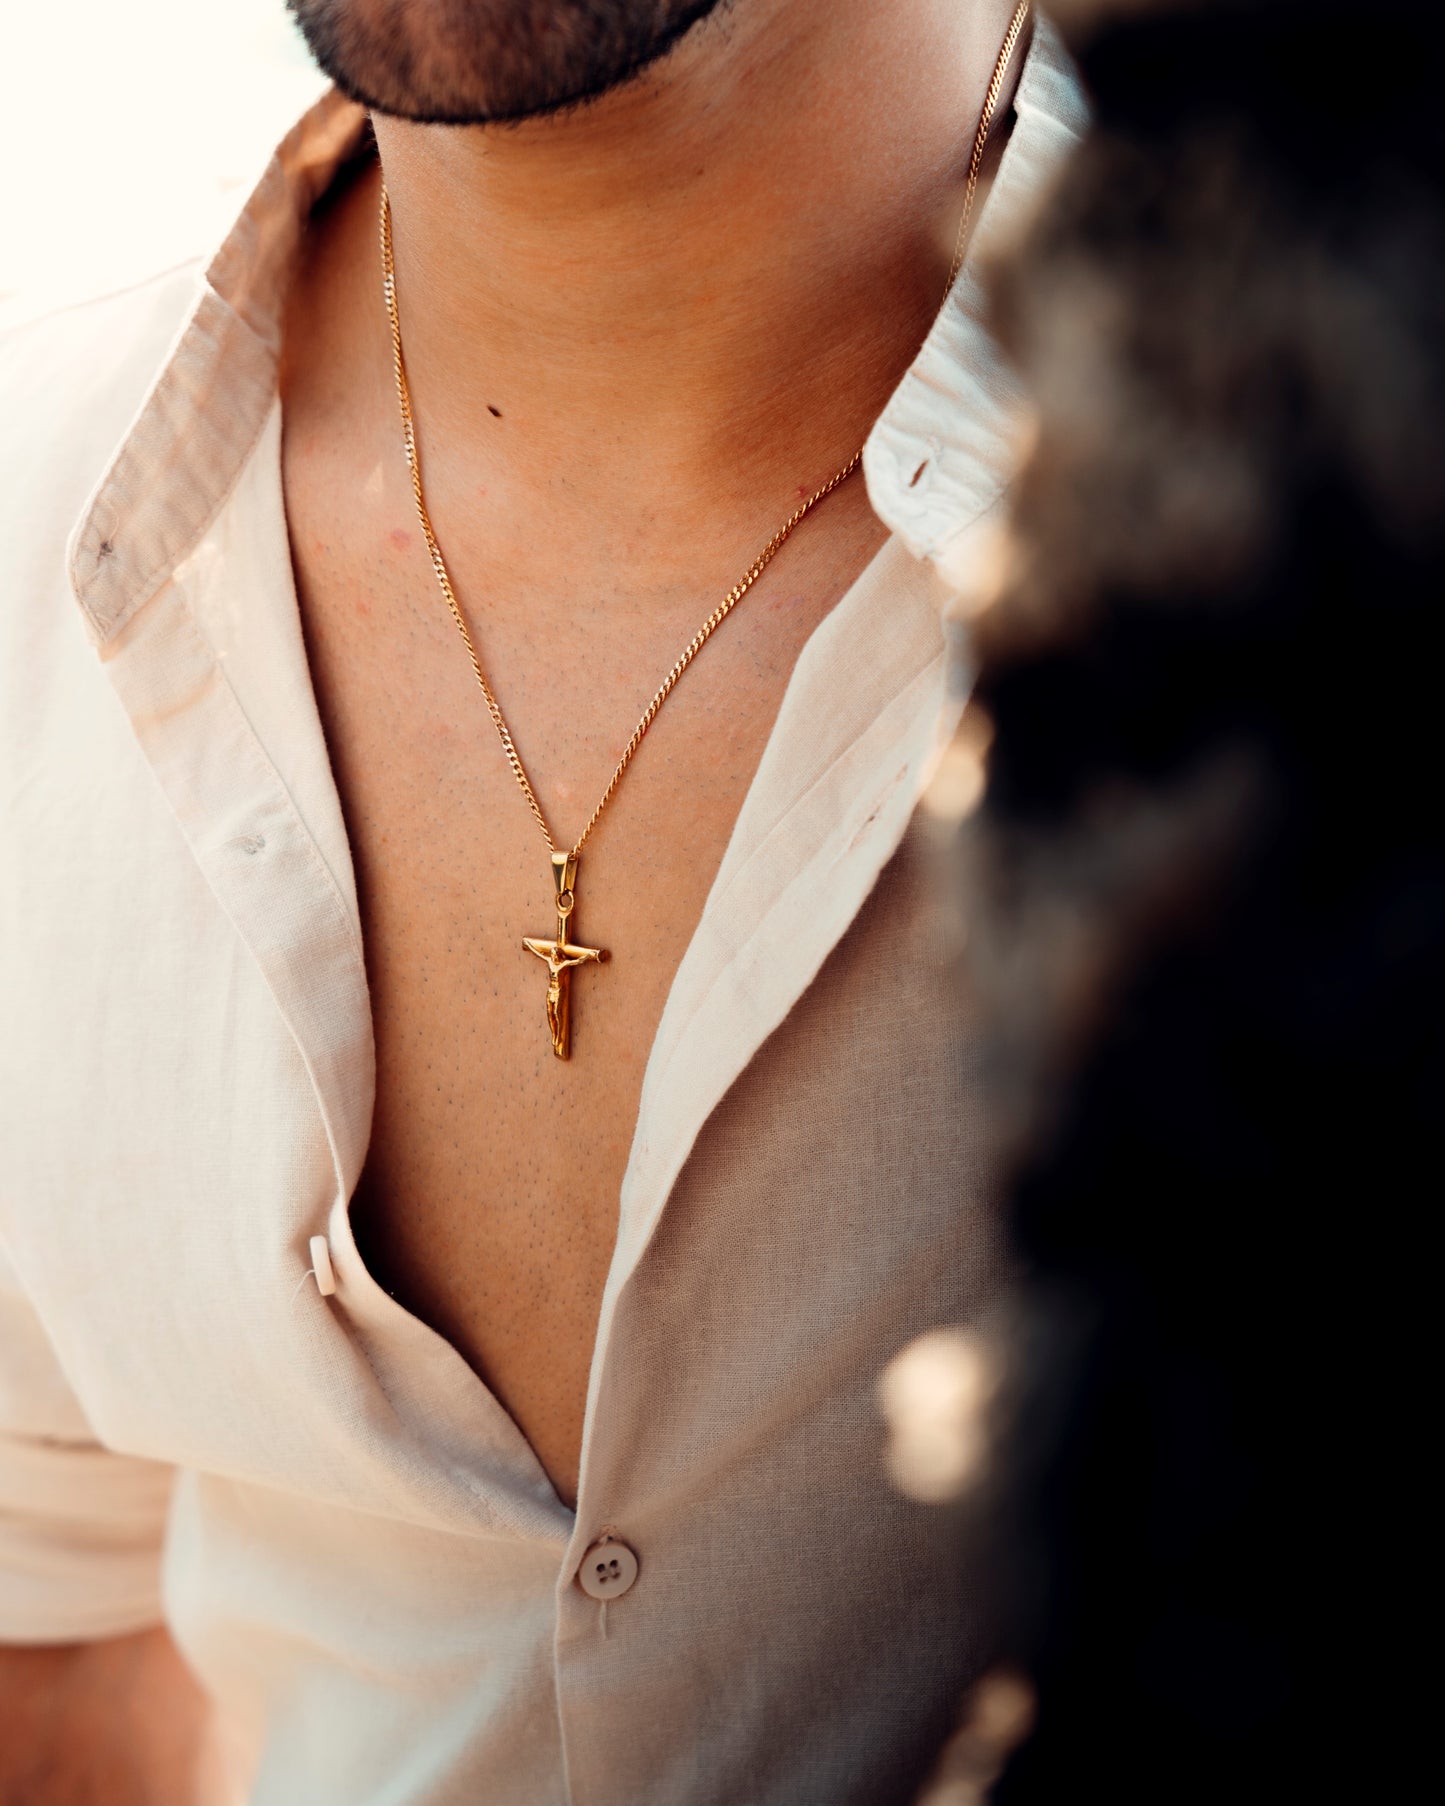 Gold cross necklace cross pendant